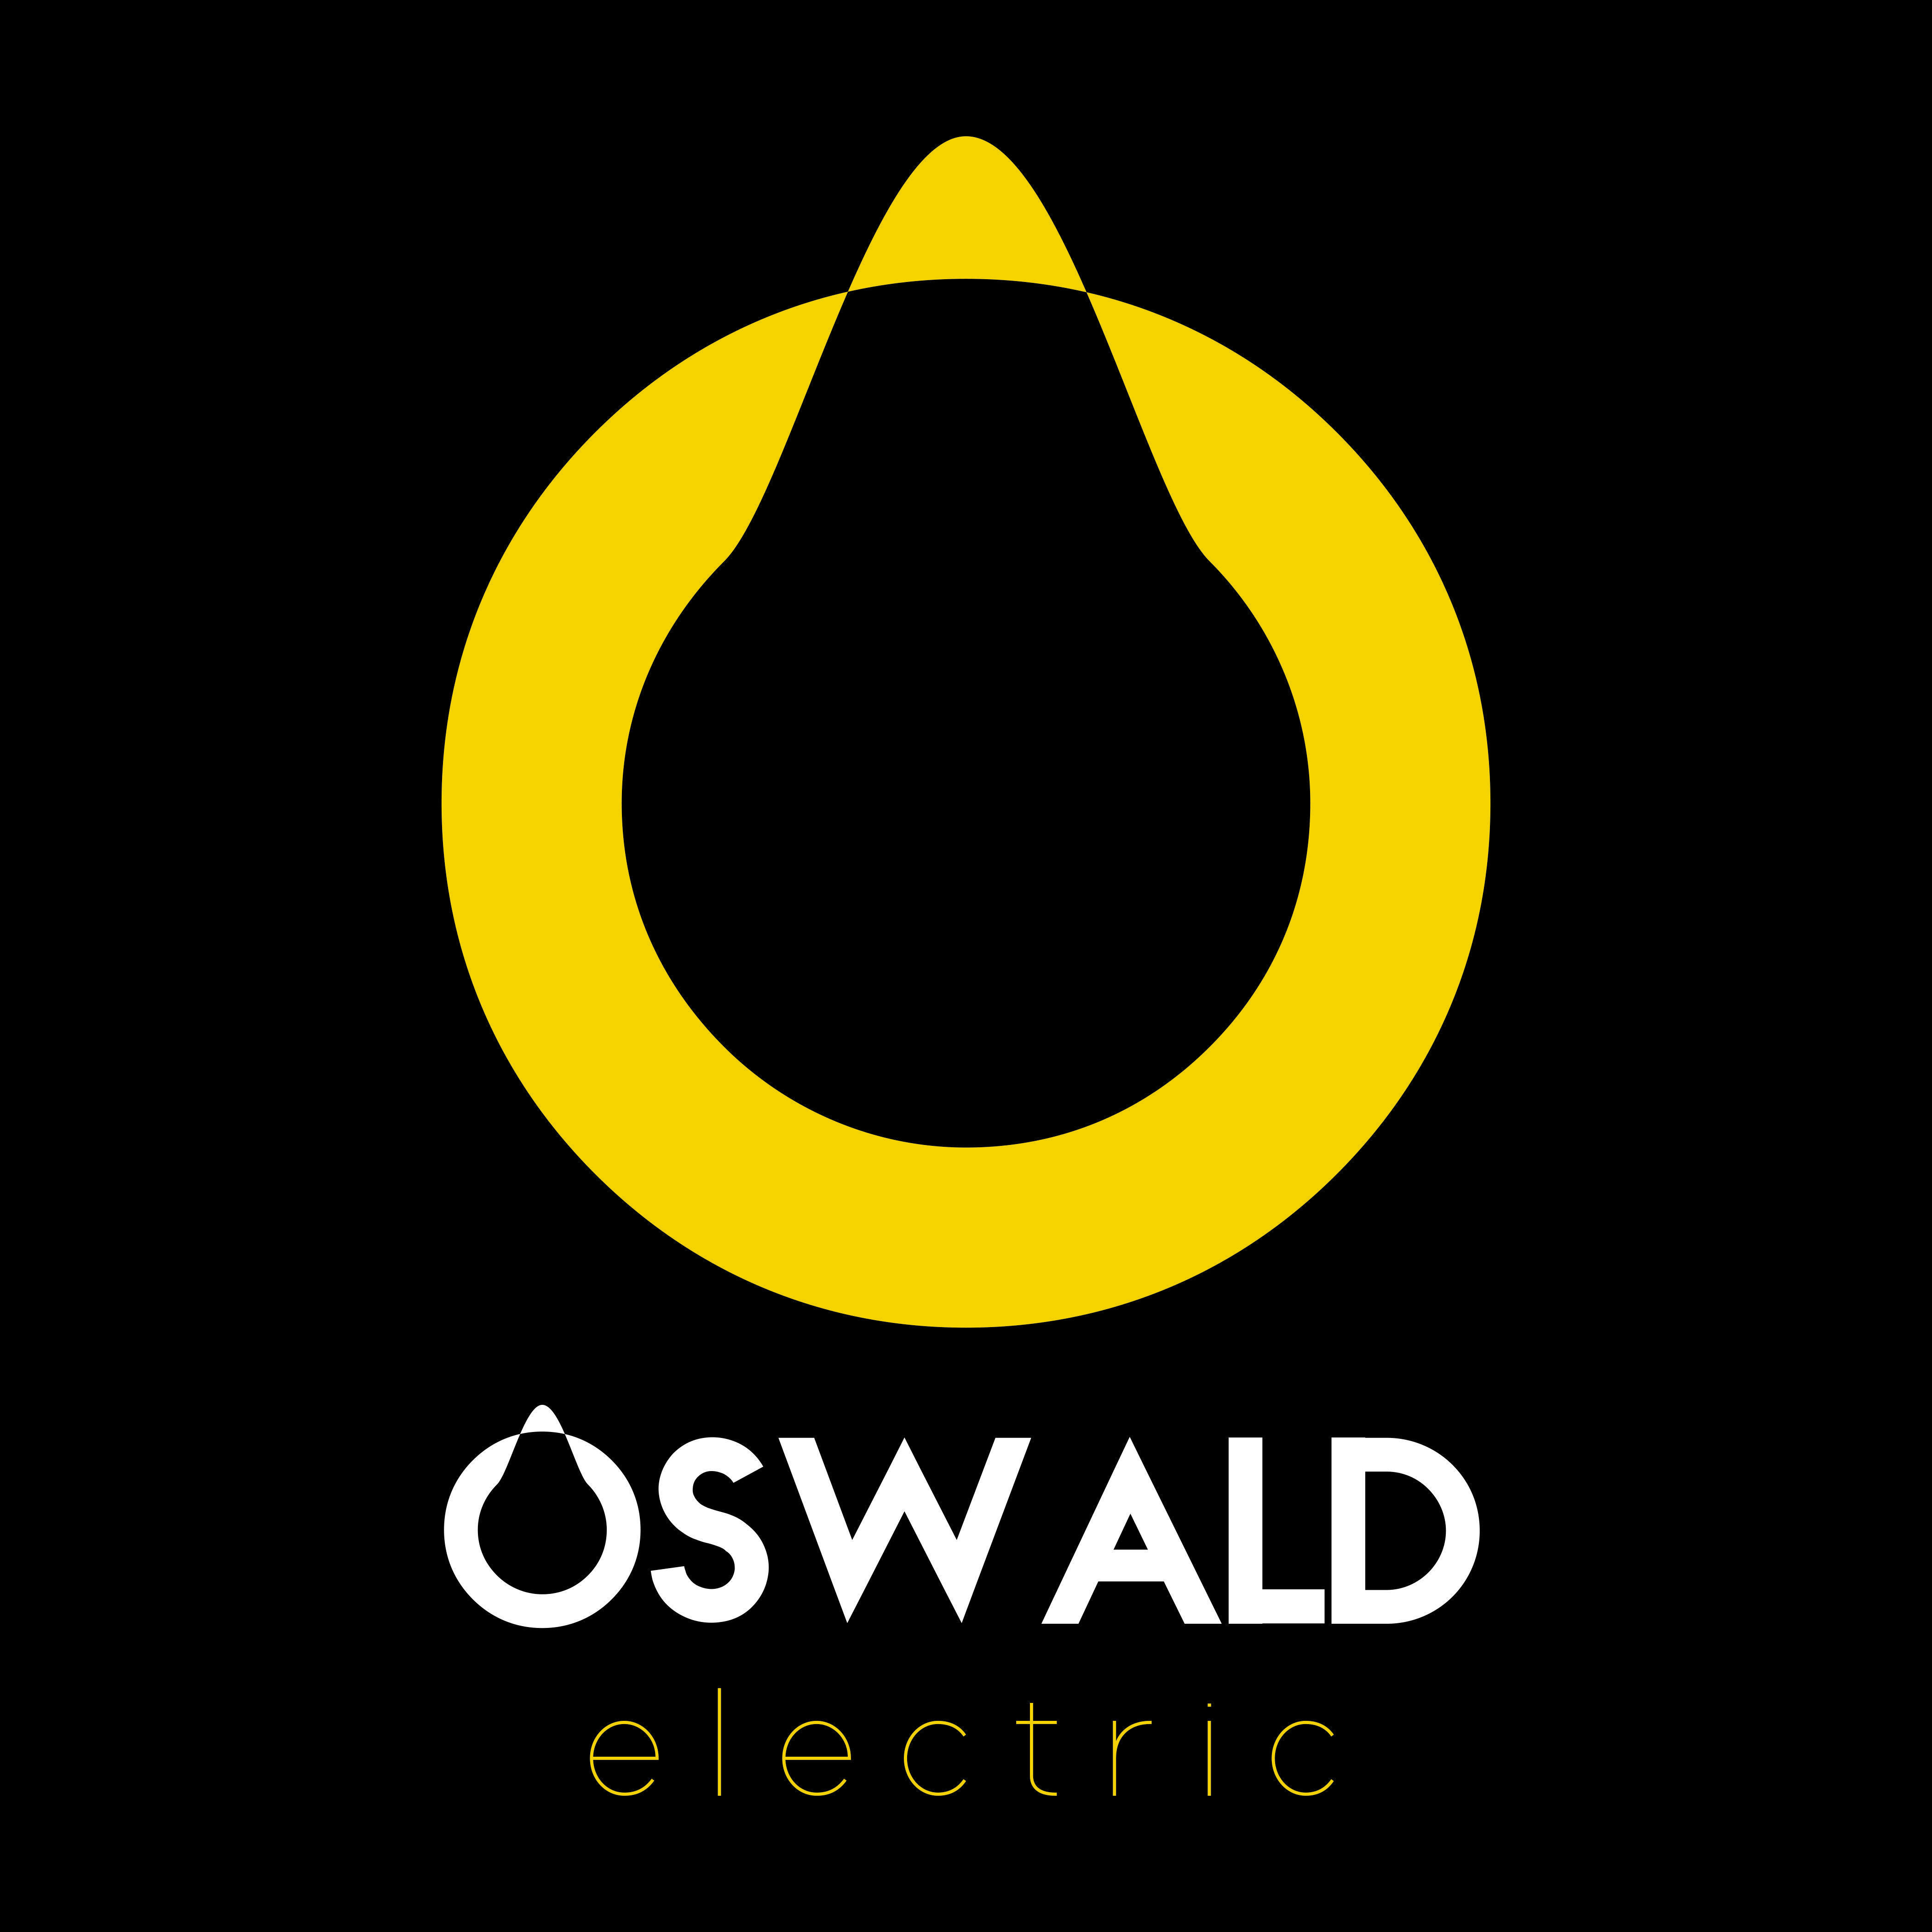 Black and Yellow Company Logo - Oswald Electric, Logo, Yellow, Black, White, Illustrator, Company ...